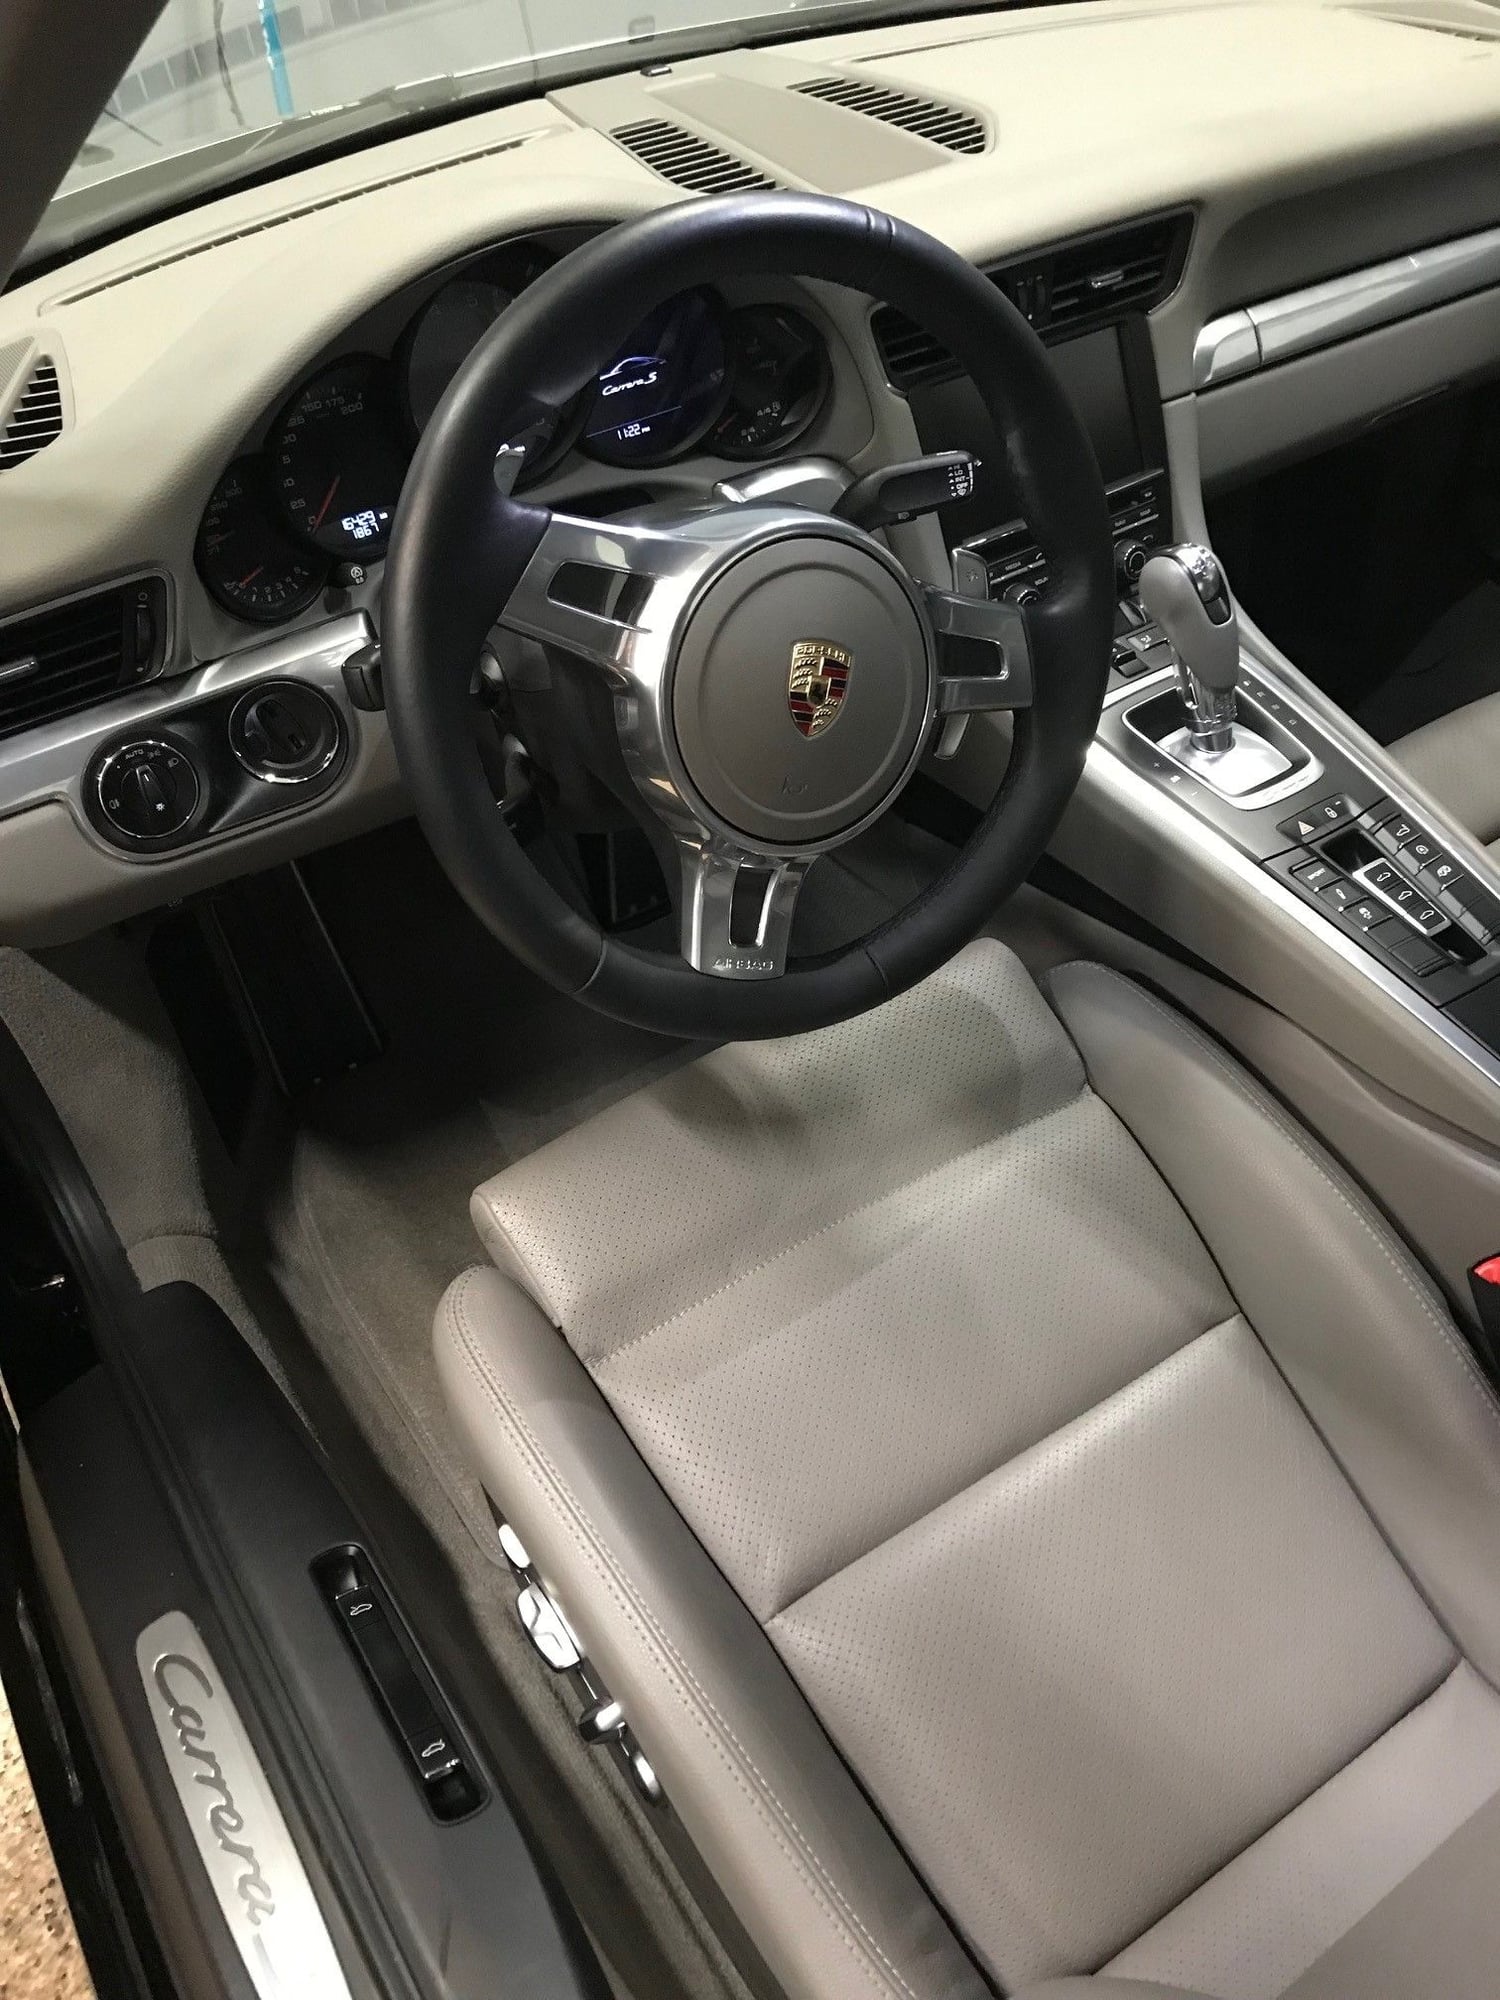 2012 Porsche 911 - 2012 Porsche 911 C2S 991 - Black/Platinum Grey, 16K Miles Excellent Cond, $74K - Used - VIN WP0AB2A94CS120433 - 16,800 Miles - 6 cyl - 2WD - Automatic - Coupe - Black - Livonia, MI 48150, United States